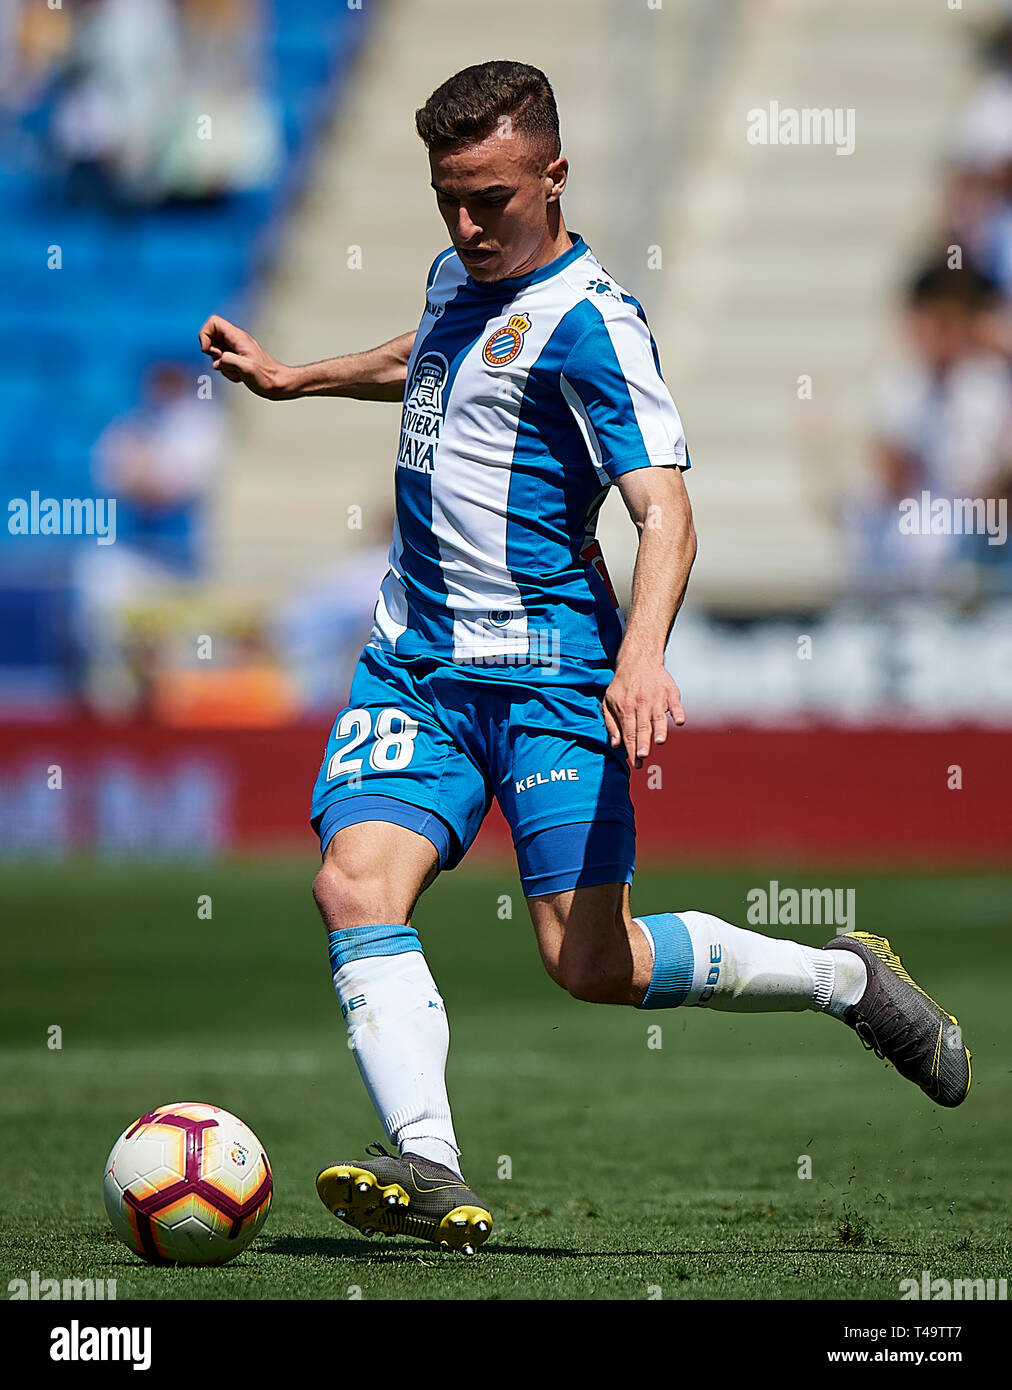 Barcelona, Spain. 13th Apr, 2019. Soccer: Liga Santander 2018/19: Adria  Pedrosa of Espanyol in action during the Spanish Primera Division 